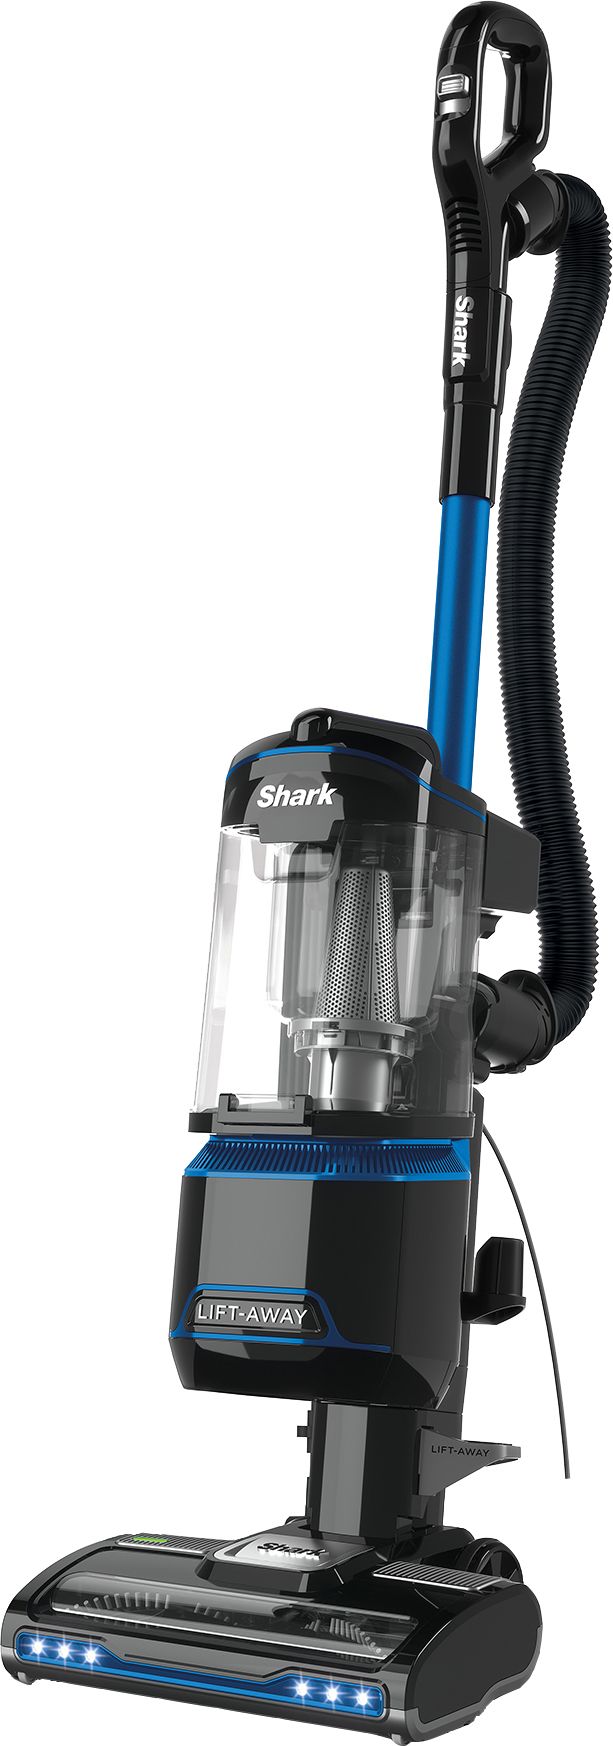 Shark Lift Away NV602UK Upright Vacuum Cleaner, Blue